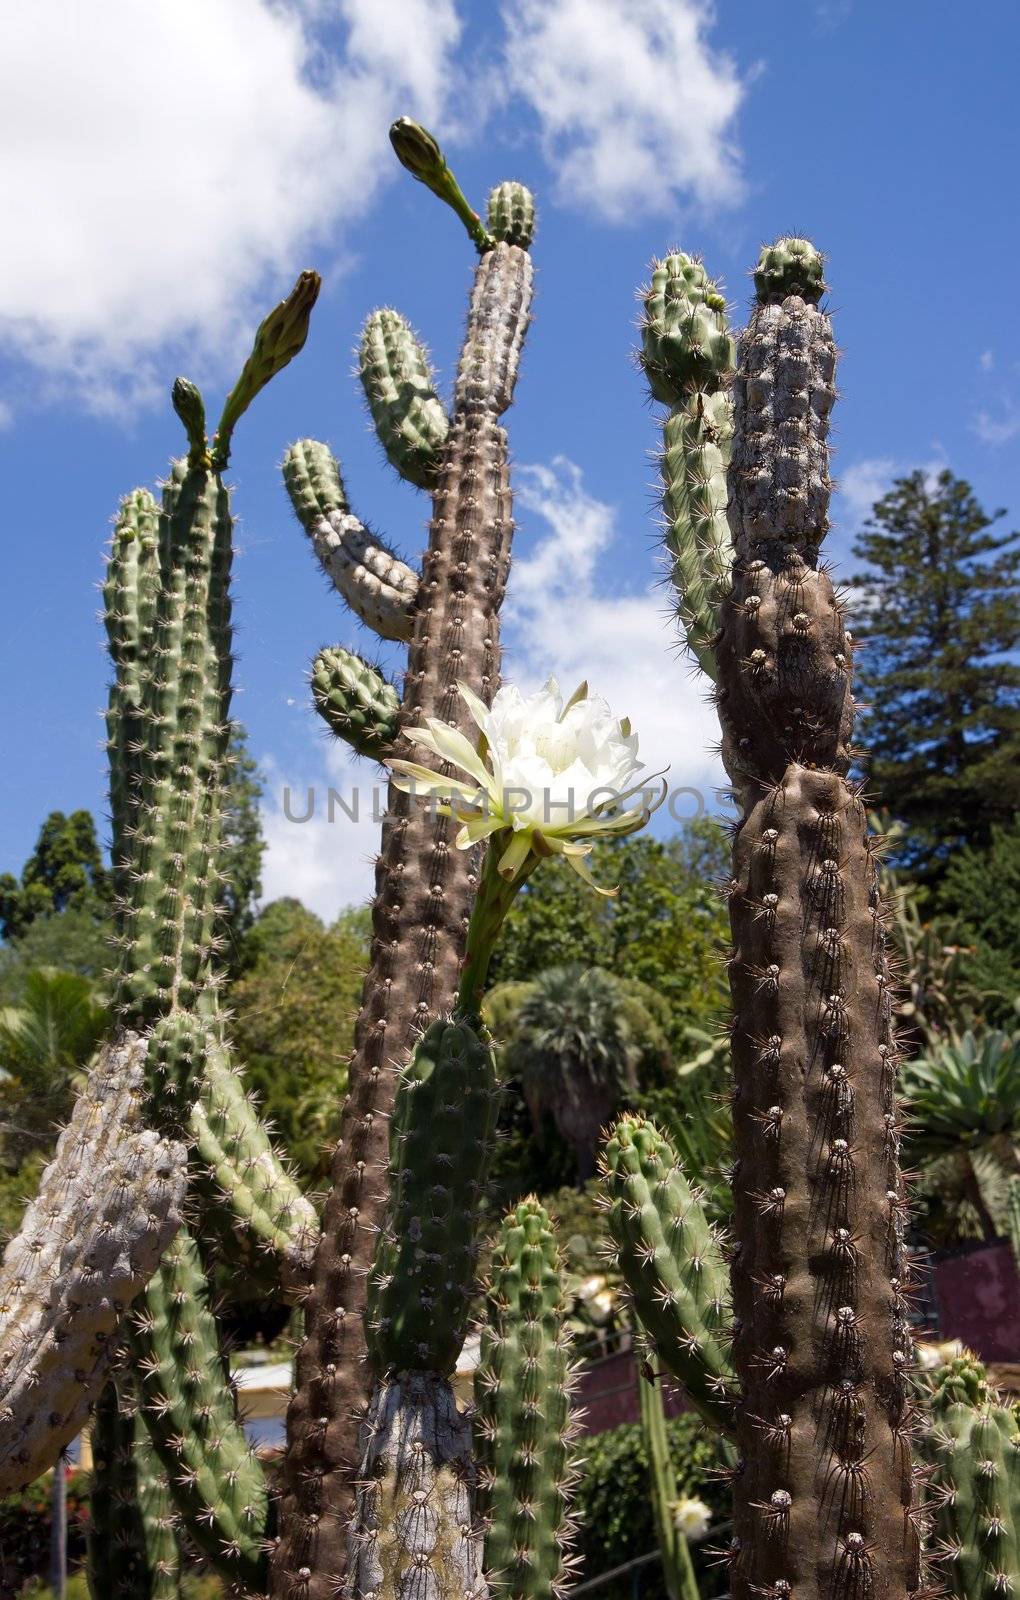 Cactus in flower  island of Madeira by neko92vl